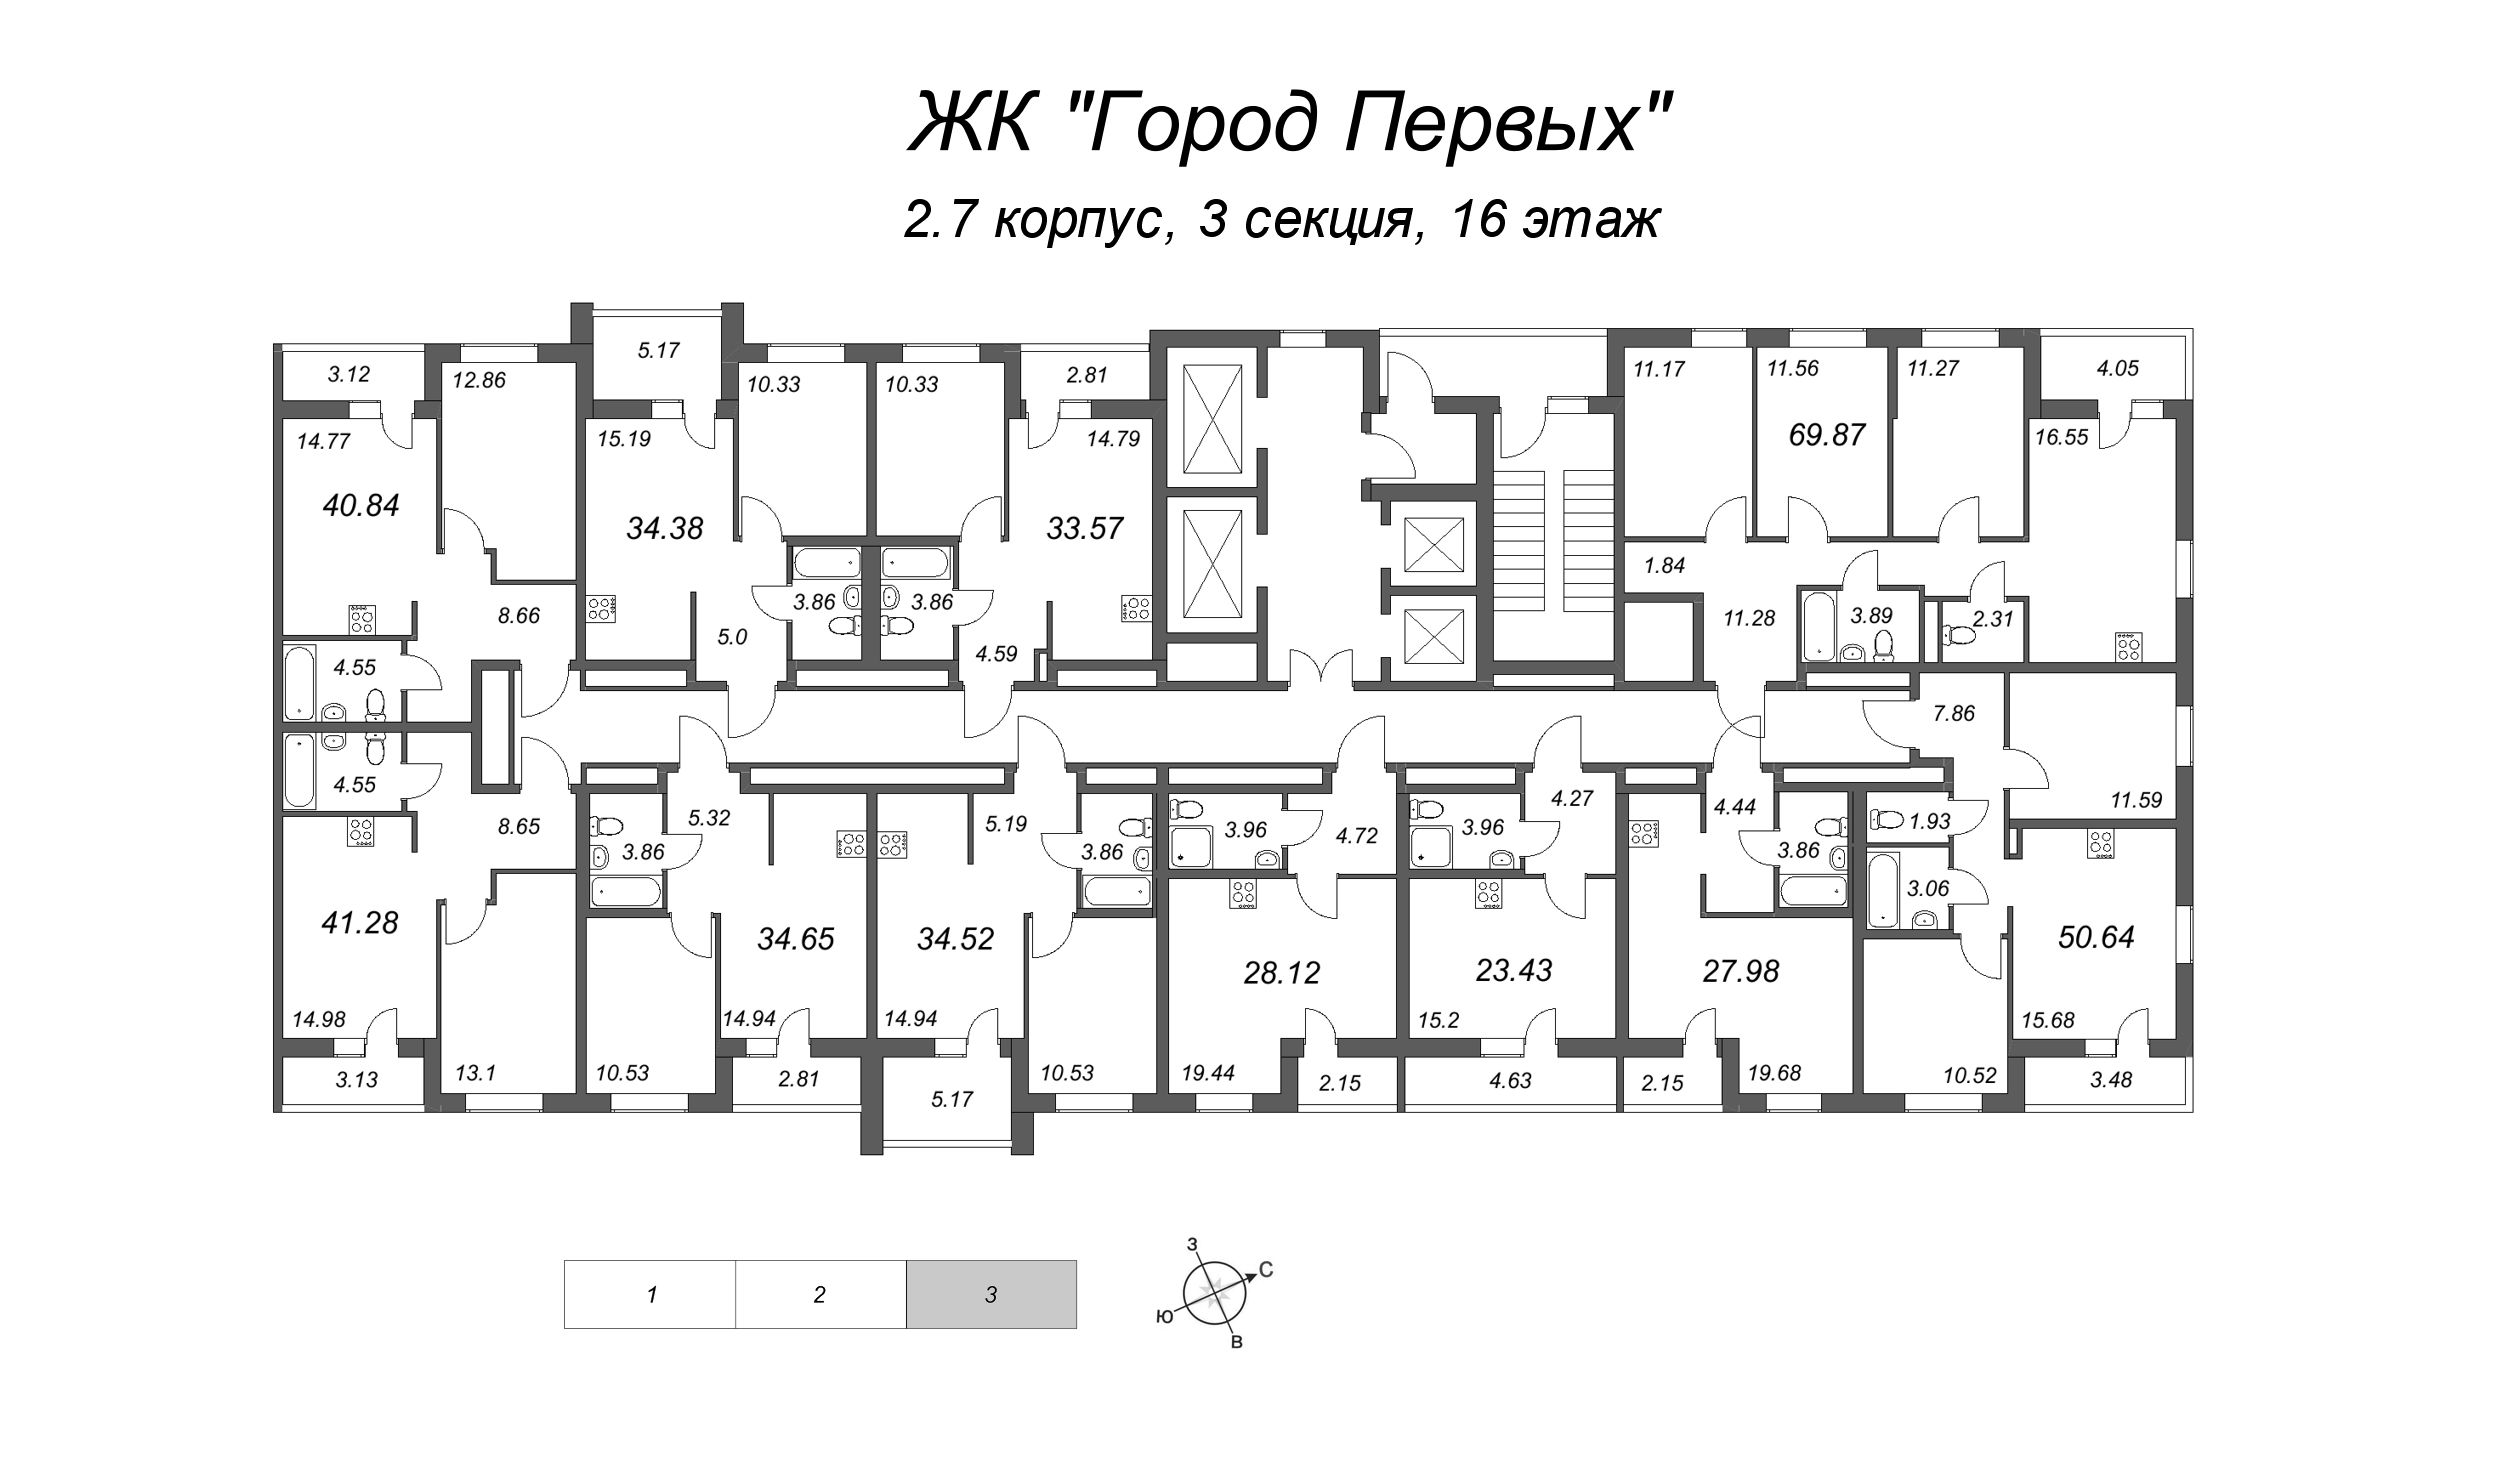 2-комнатная (Евро) квартира, 37.27 м² - планировка этажа